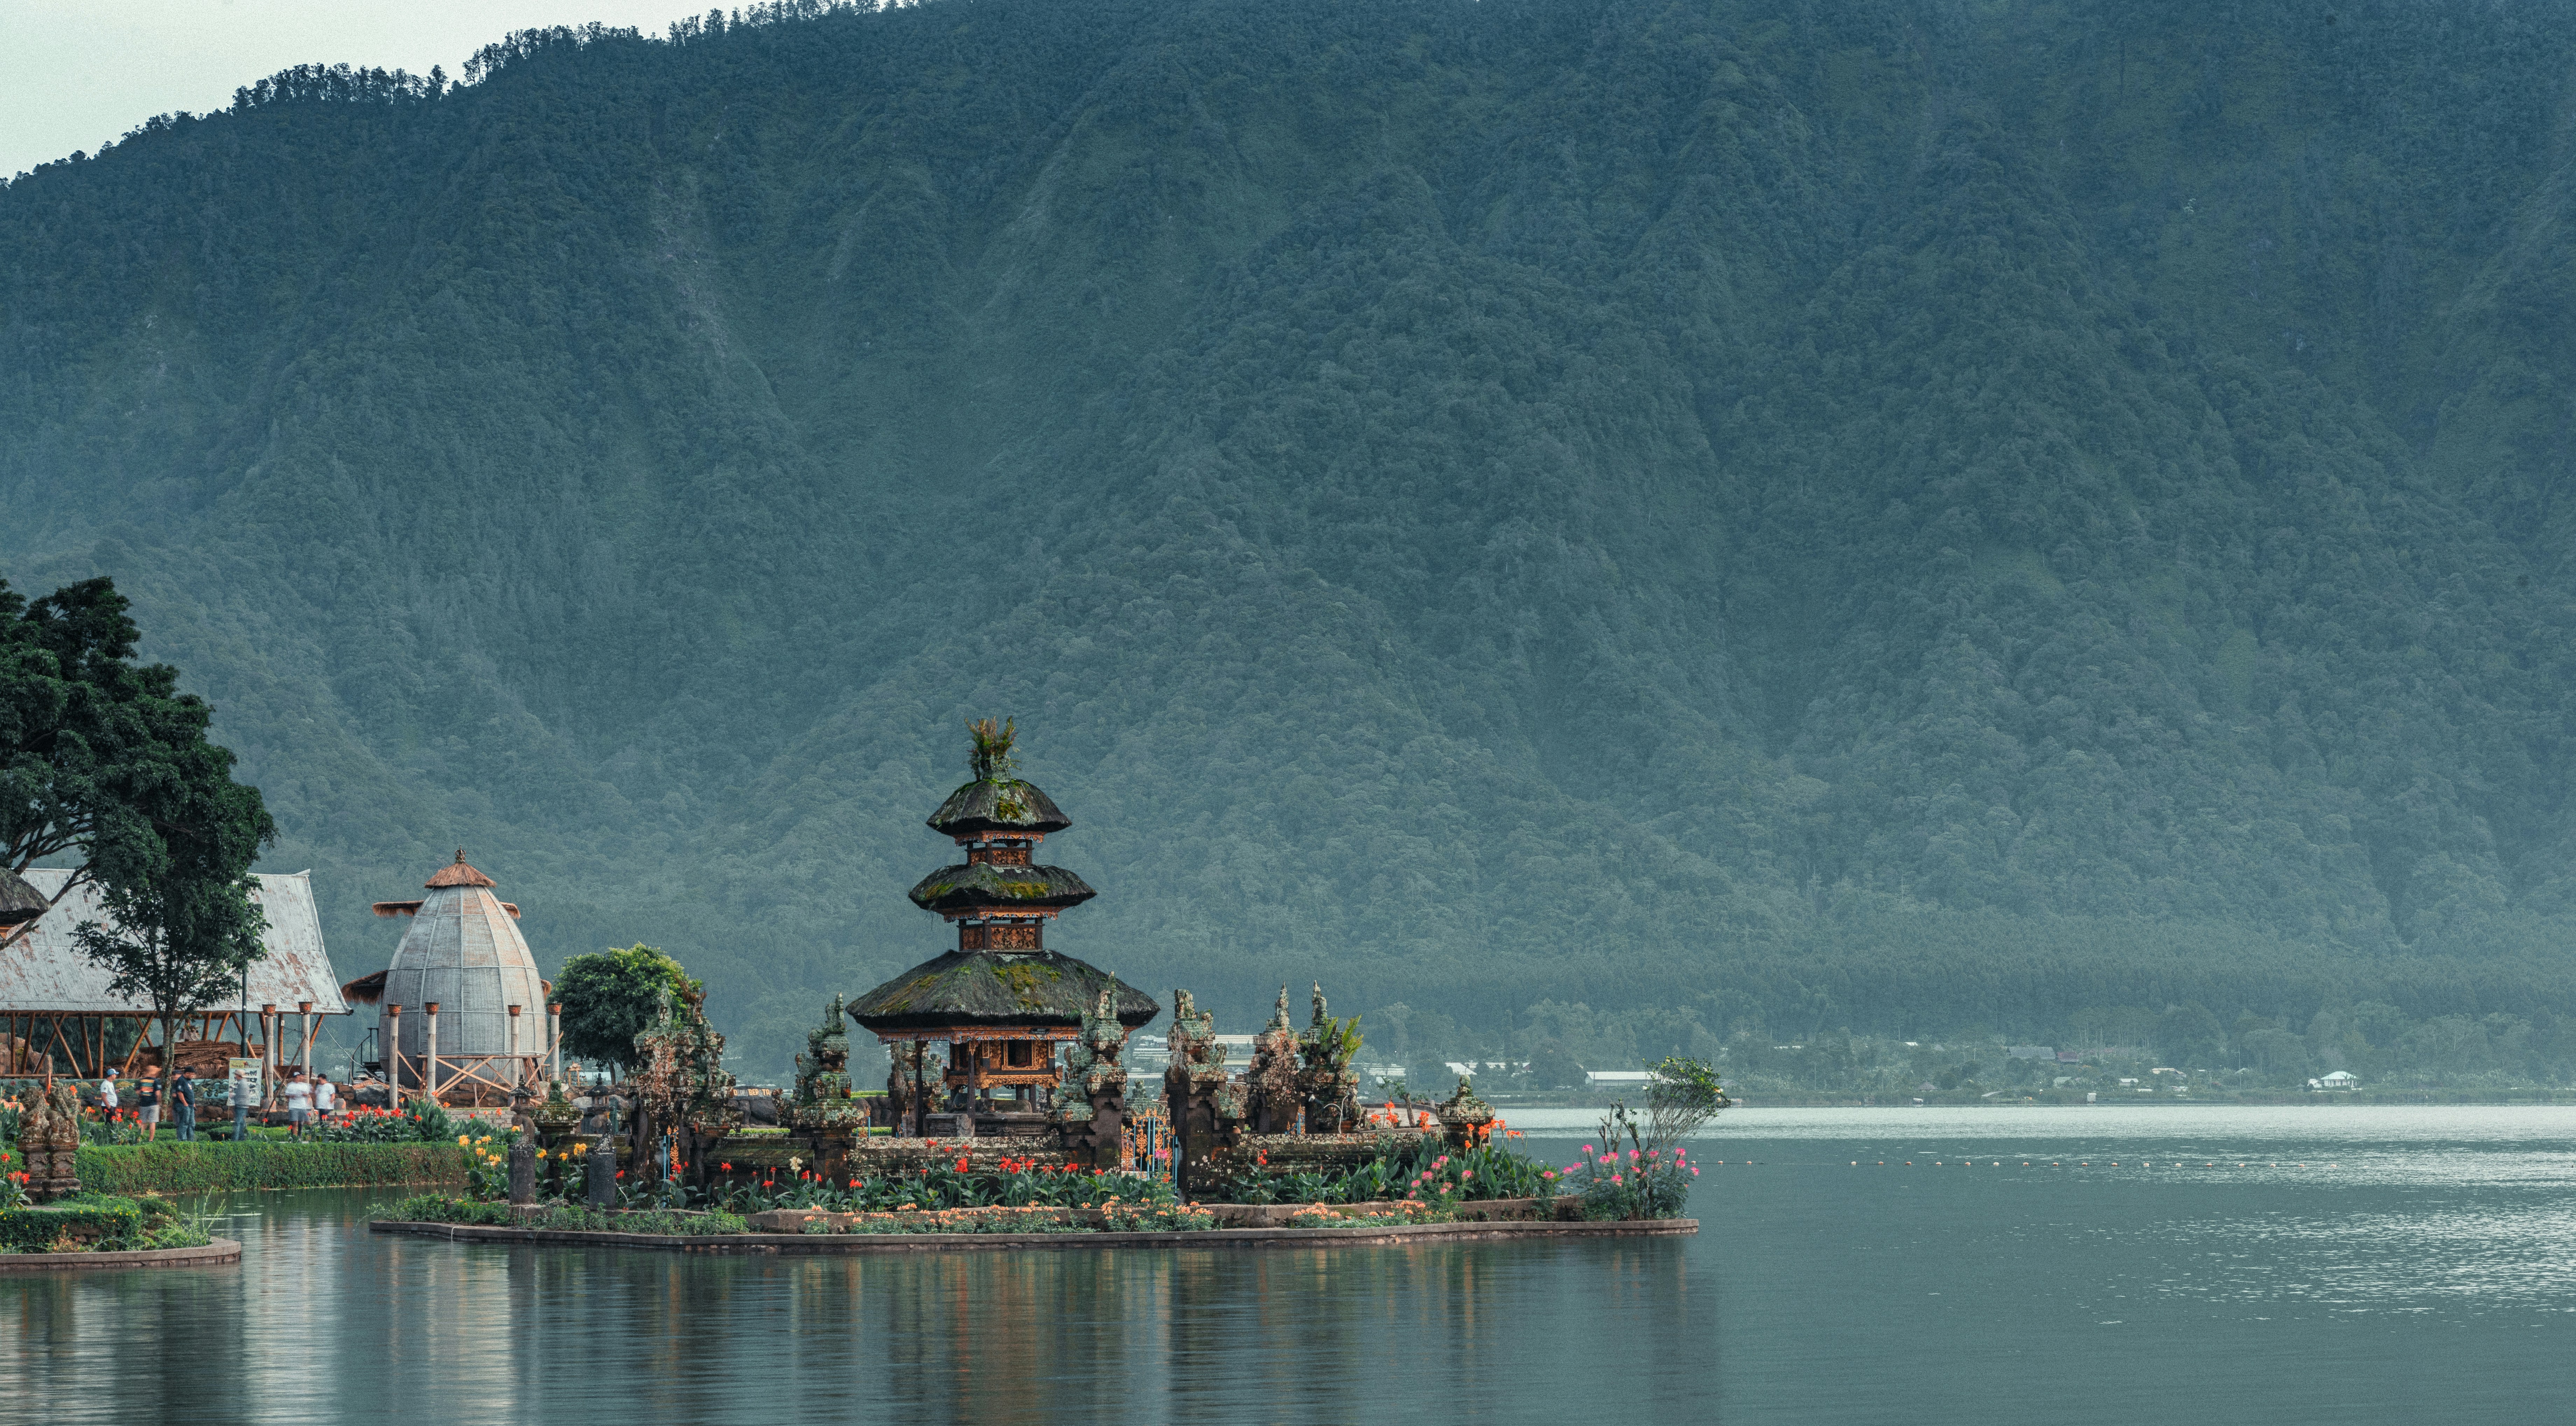 Pura Ulun Danu Beratan, or Pura Bratan, is a major Hindu Shaivite water temple on Bali, Indonesia. The temple complex is located on the shores of Lake Bratan in the mountains near Bedugul.